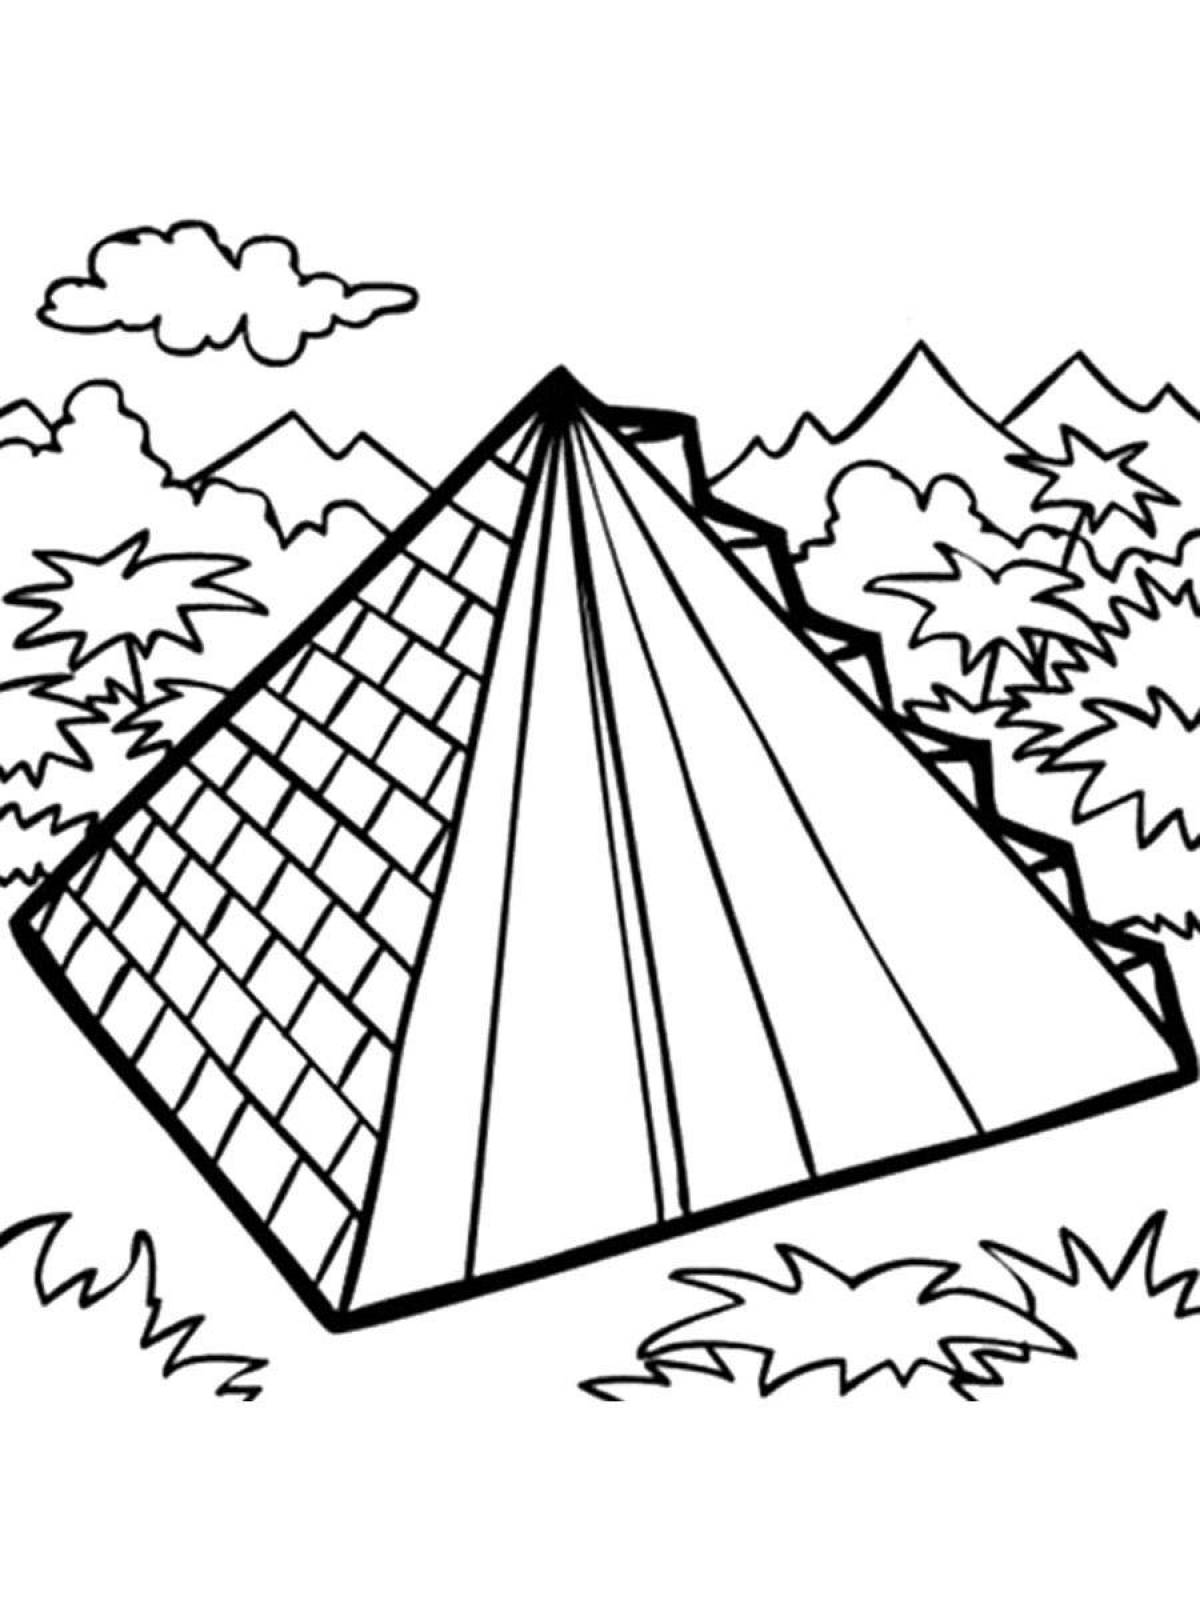 Impressive Cheops pyramid coloring book